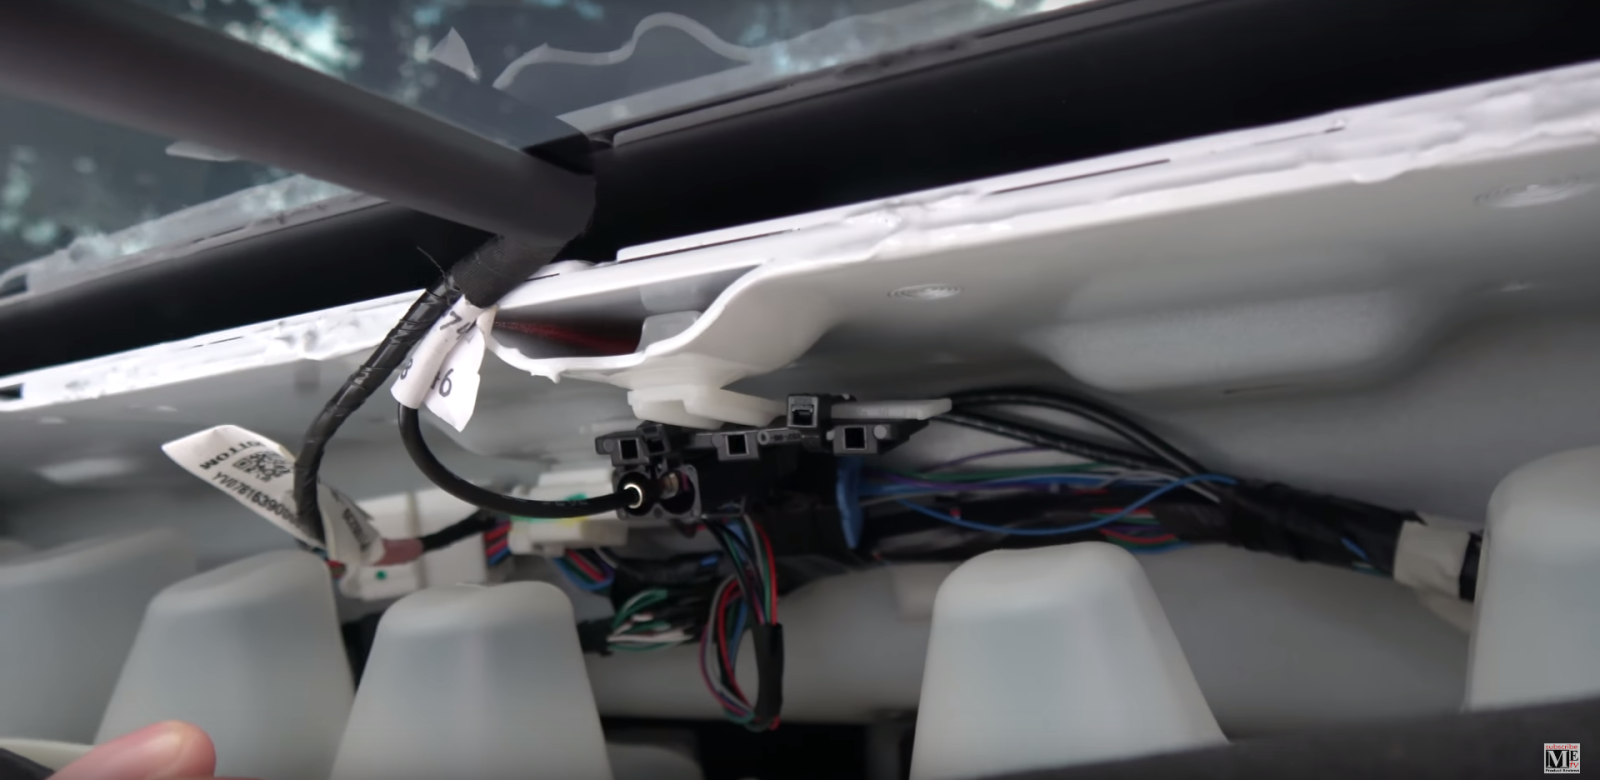 Tesla Autopilot 2.0: retrofit to next gen sensors likely to be